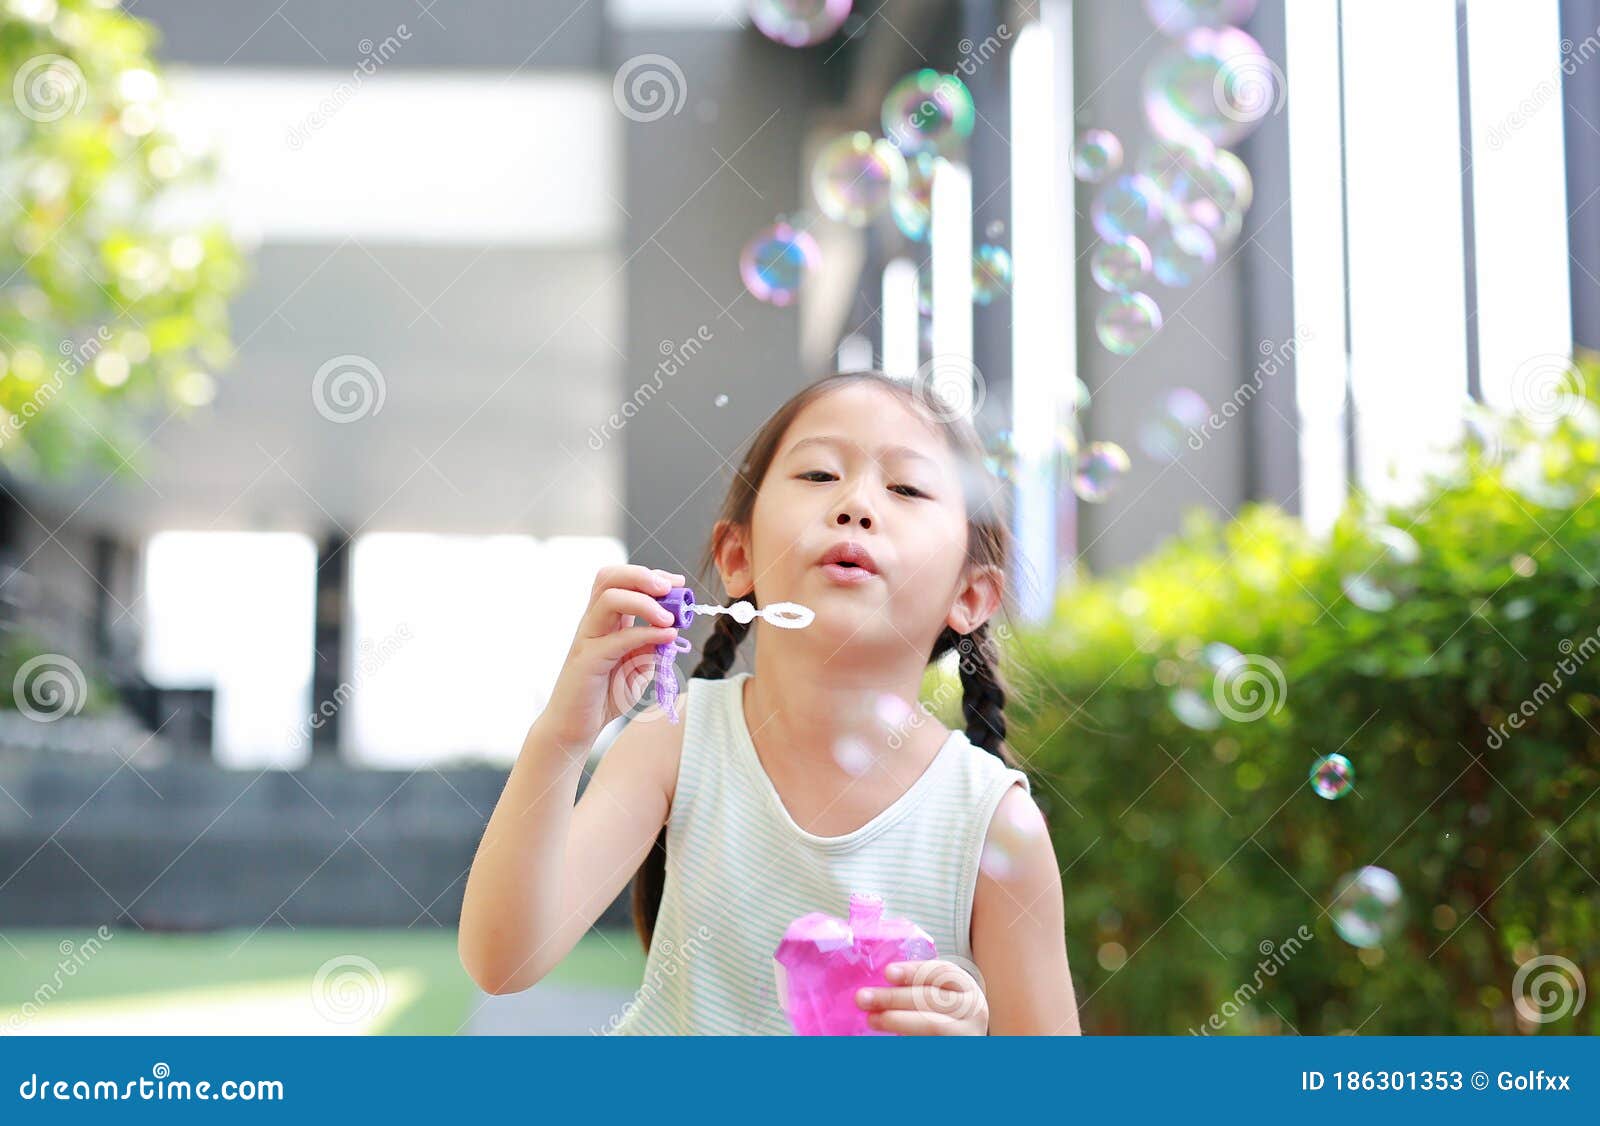 wanking asian Bubble outdoor